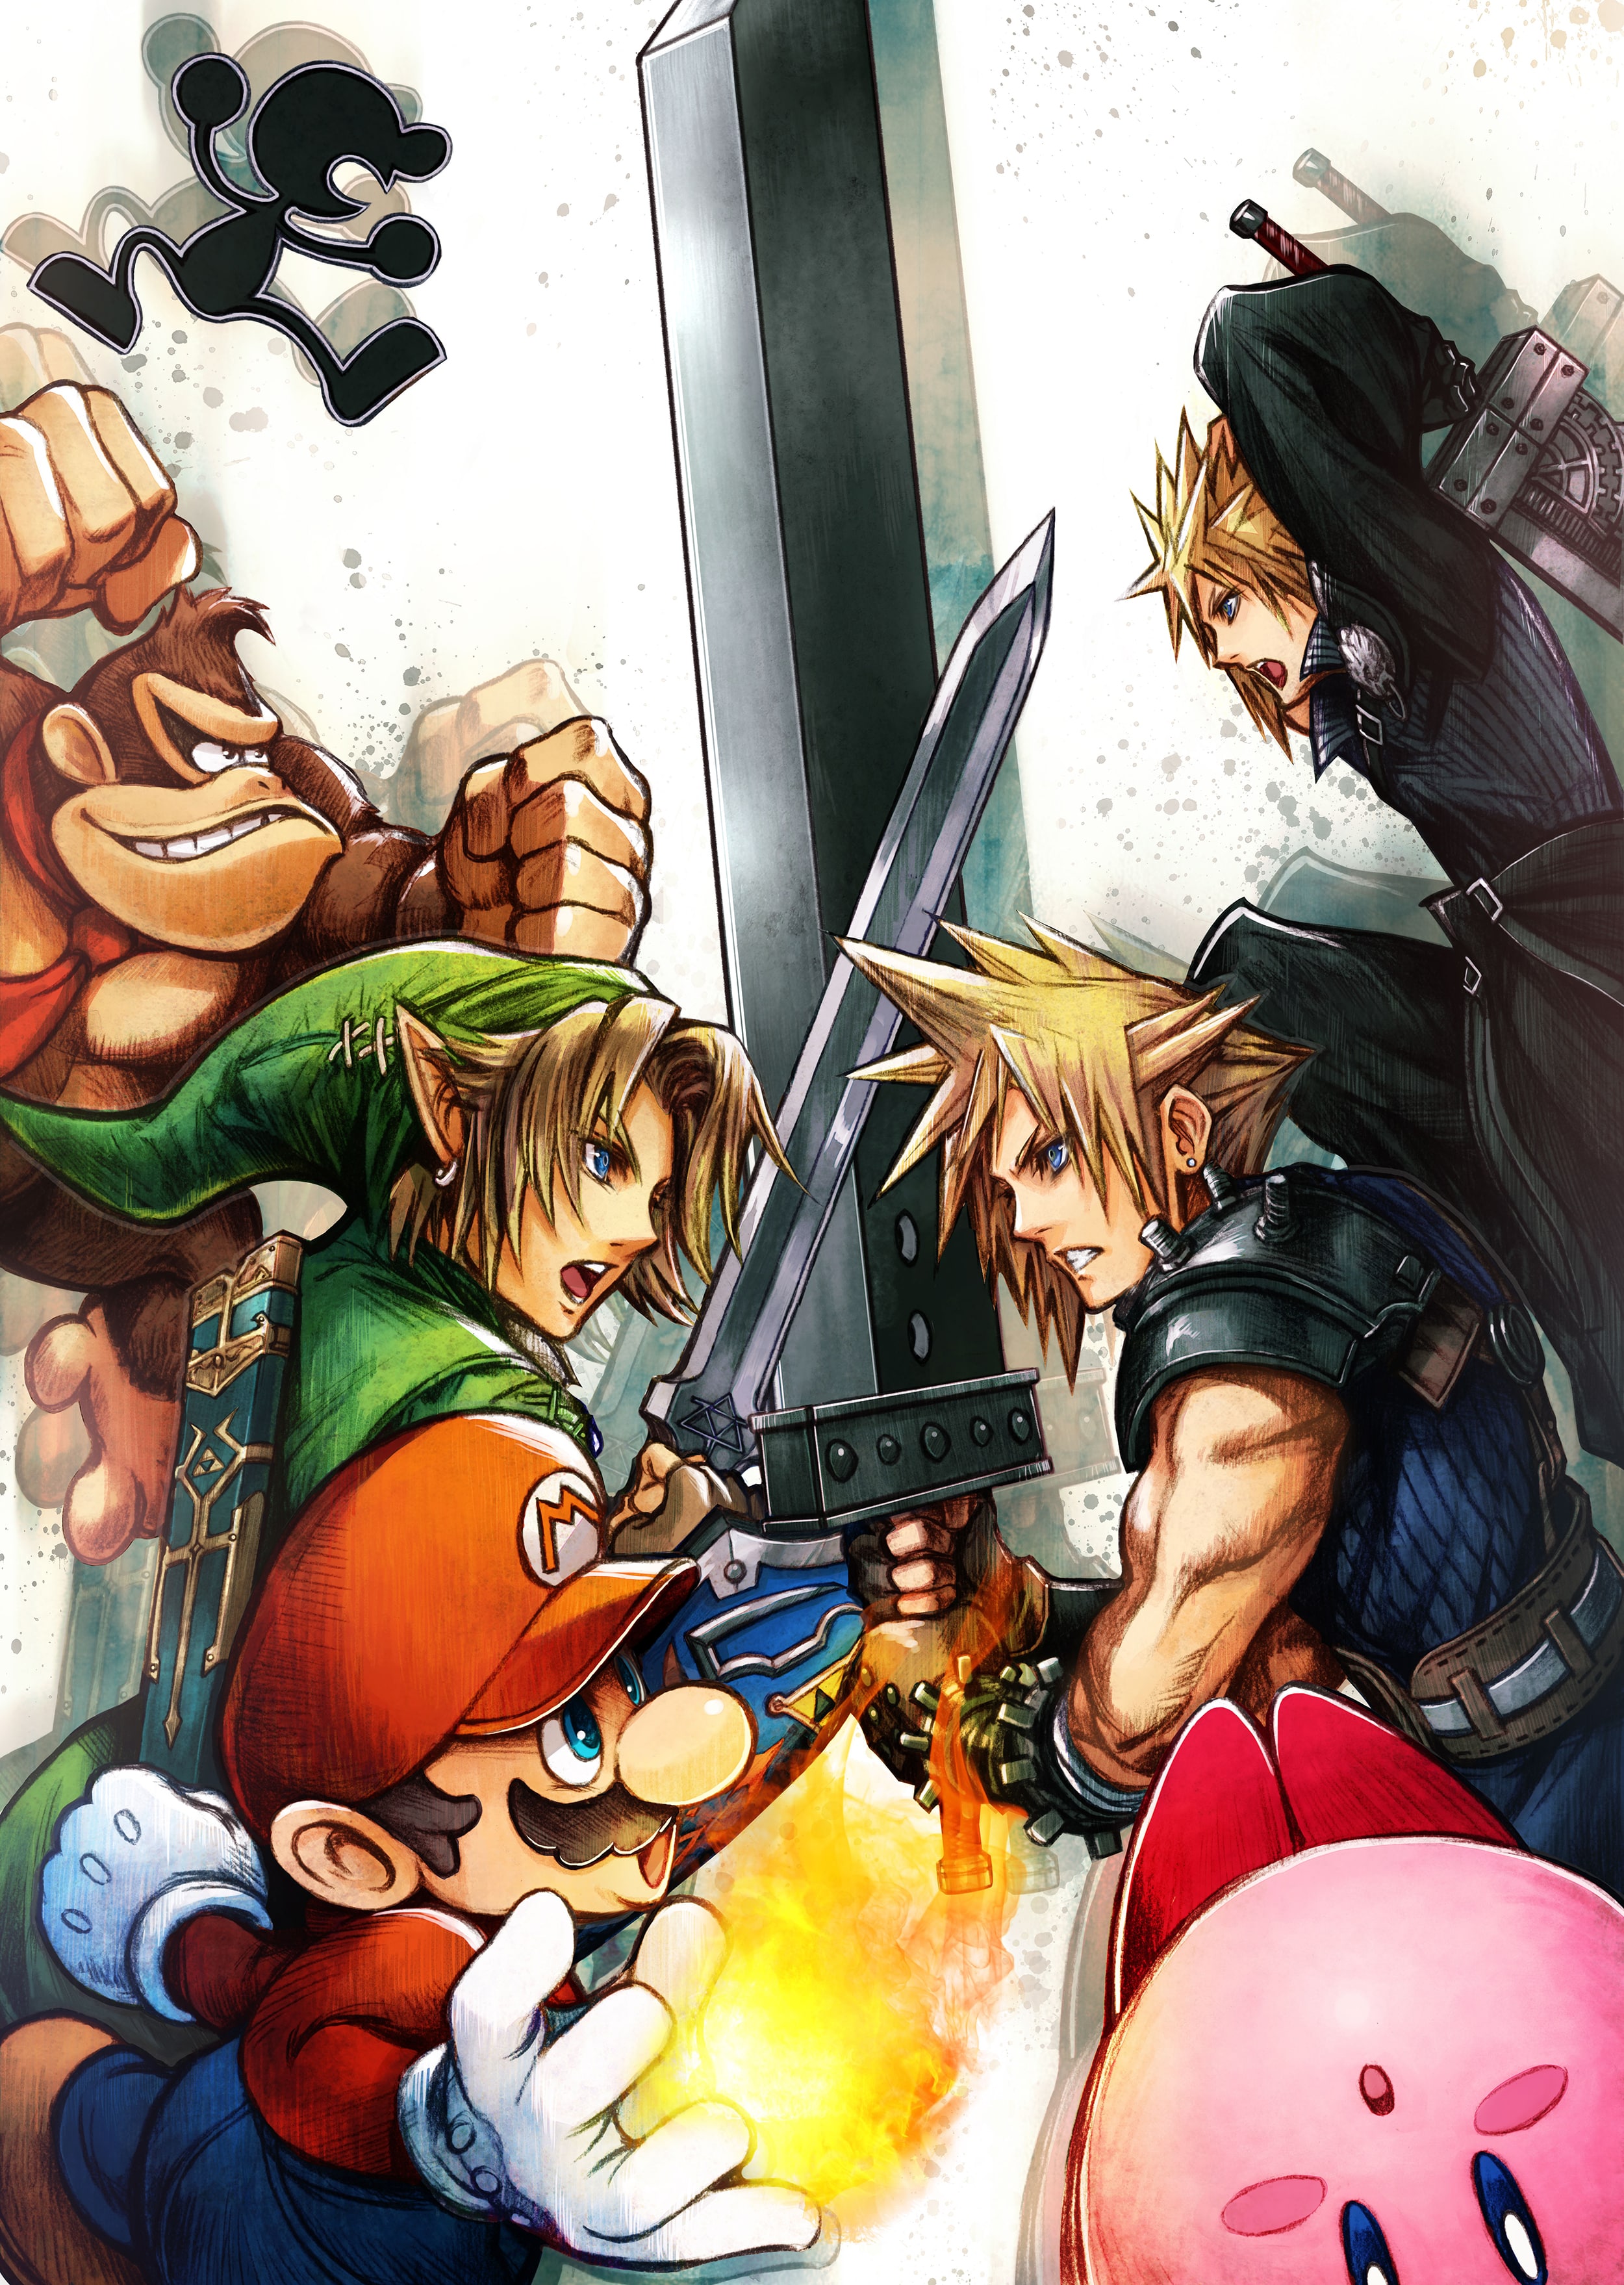 Super Smash Bros Wii U and 3DS Cloud Artwork